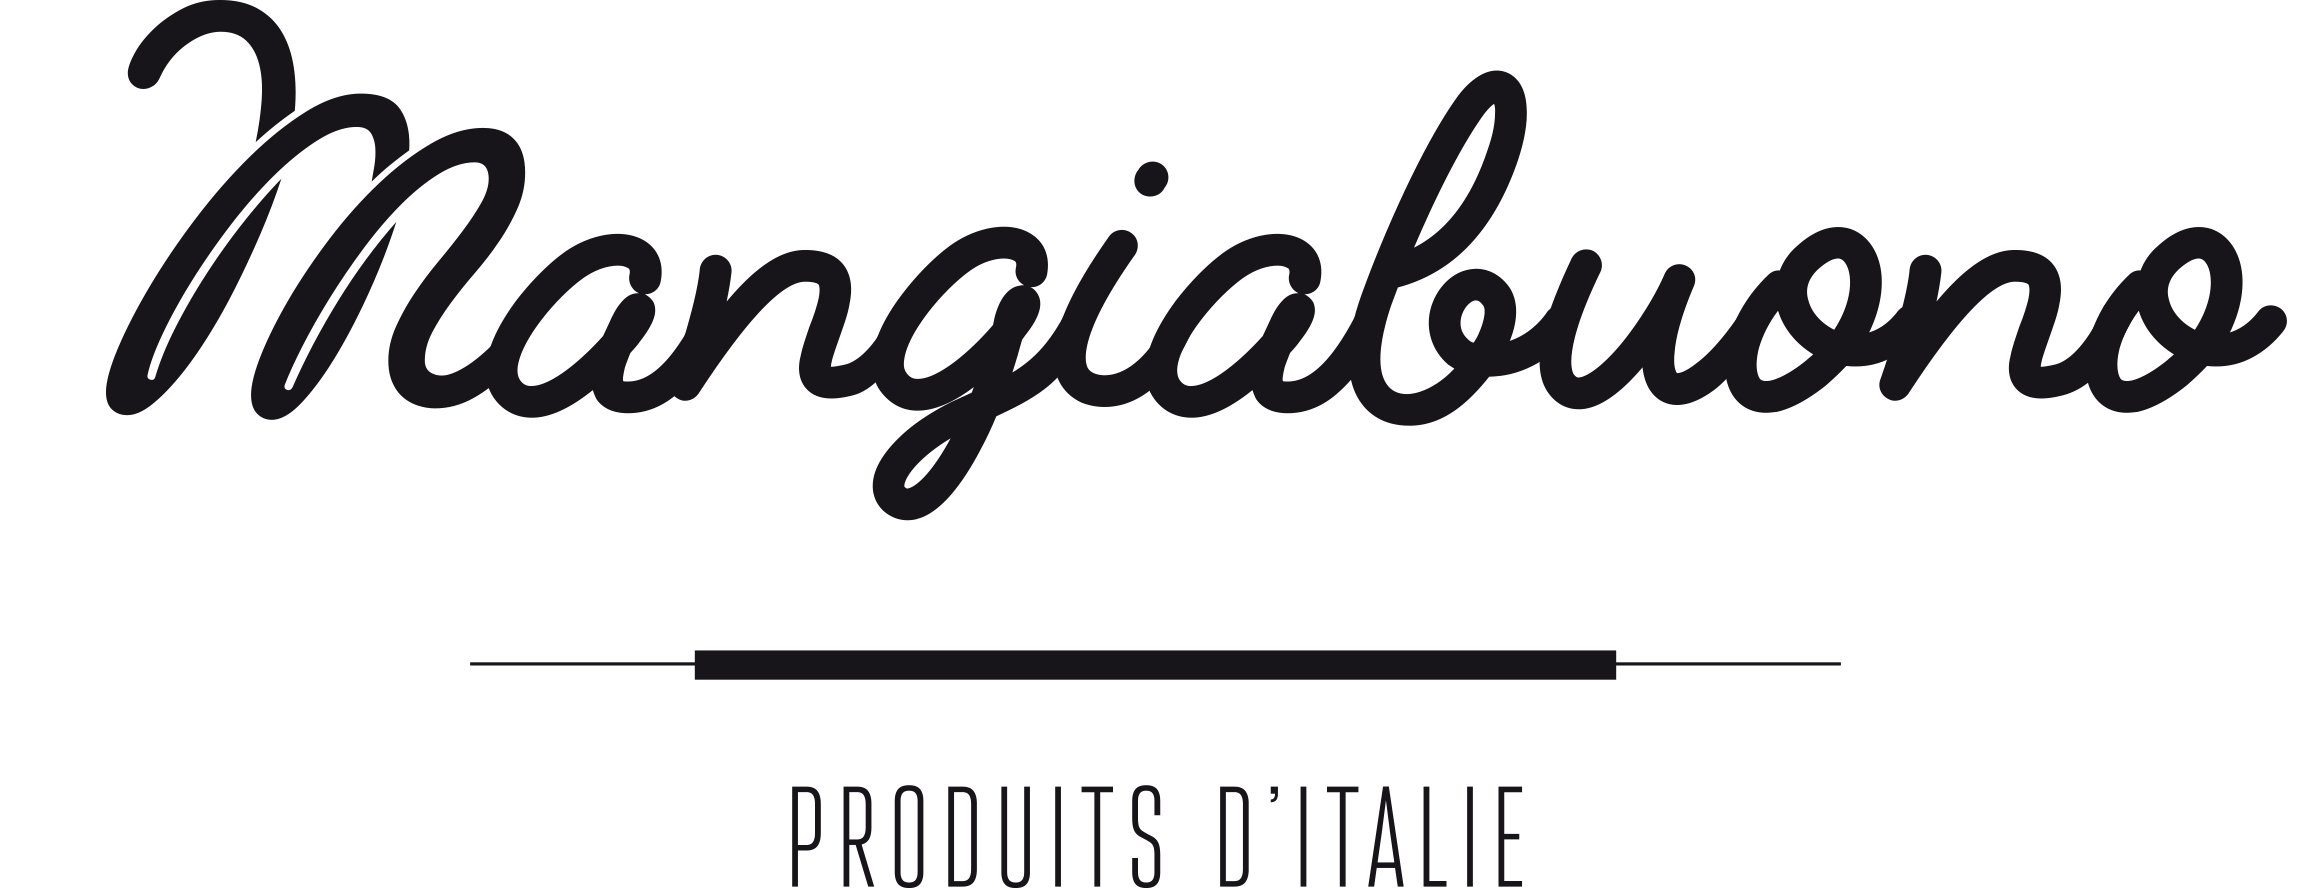 Mangiabuono, épicerie italienne, lyon 1er